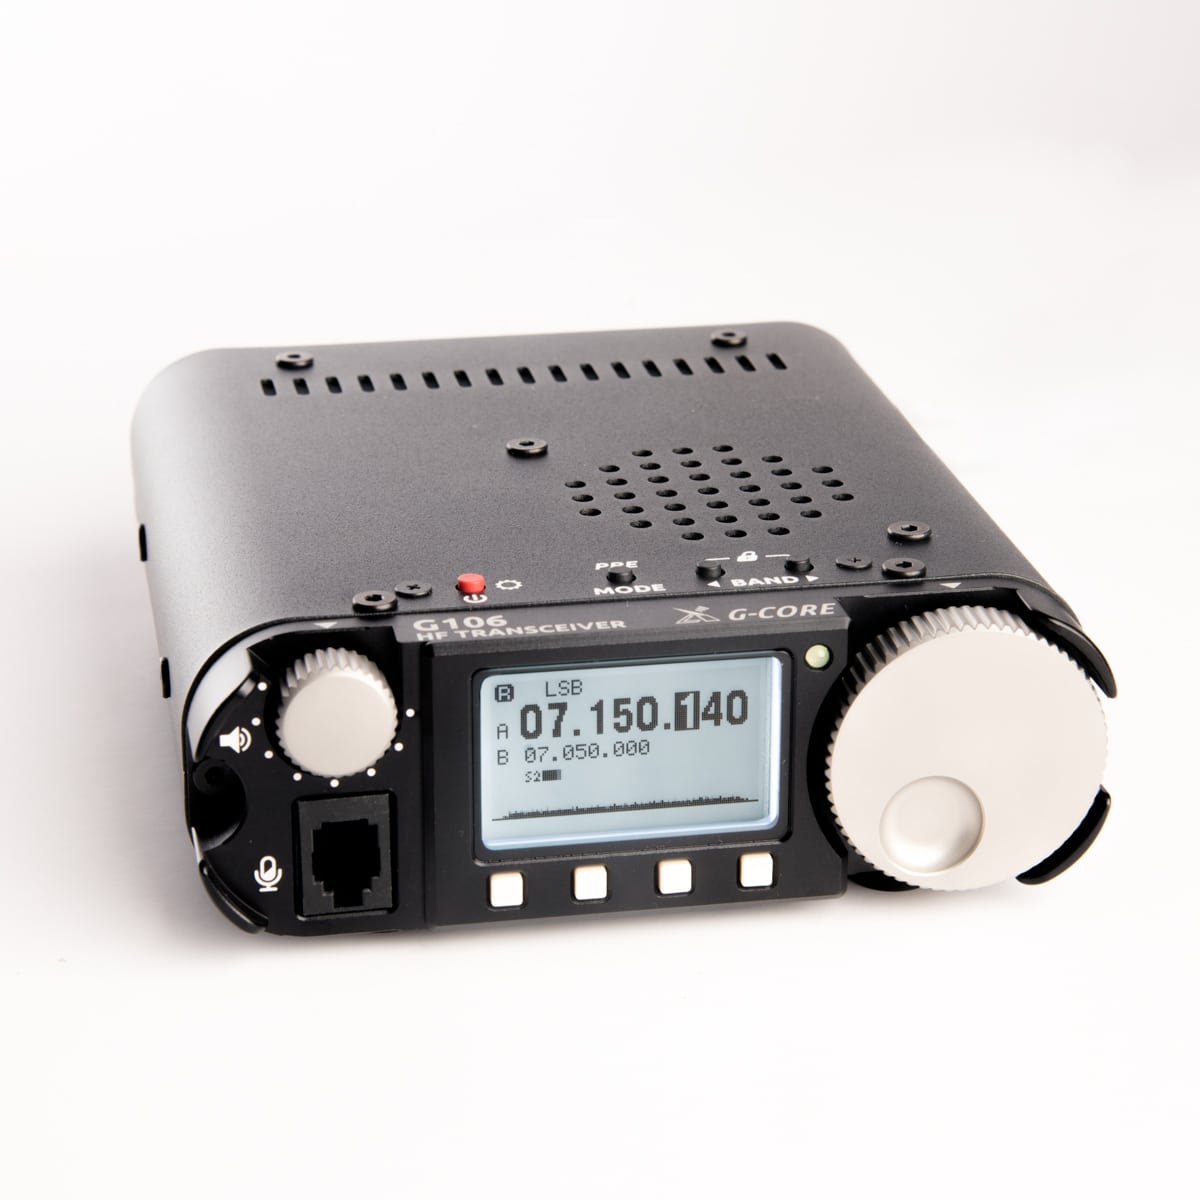 Xiegu Portable Transceiver G106 HF QRP 5W 379.00 €|Free shipping  Astroradio